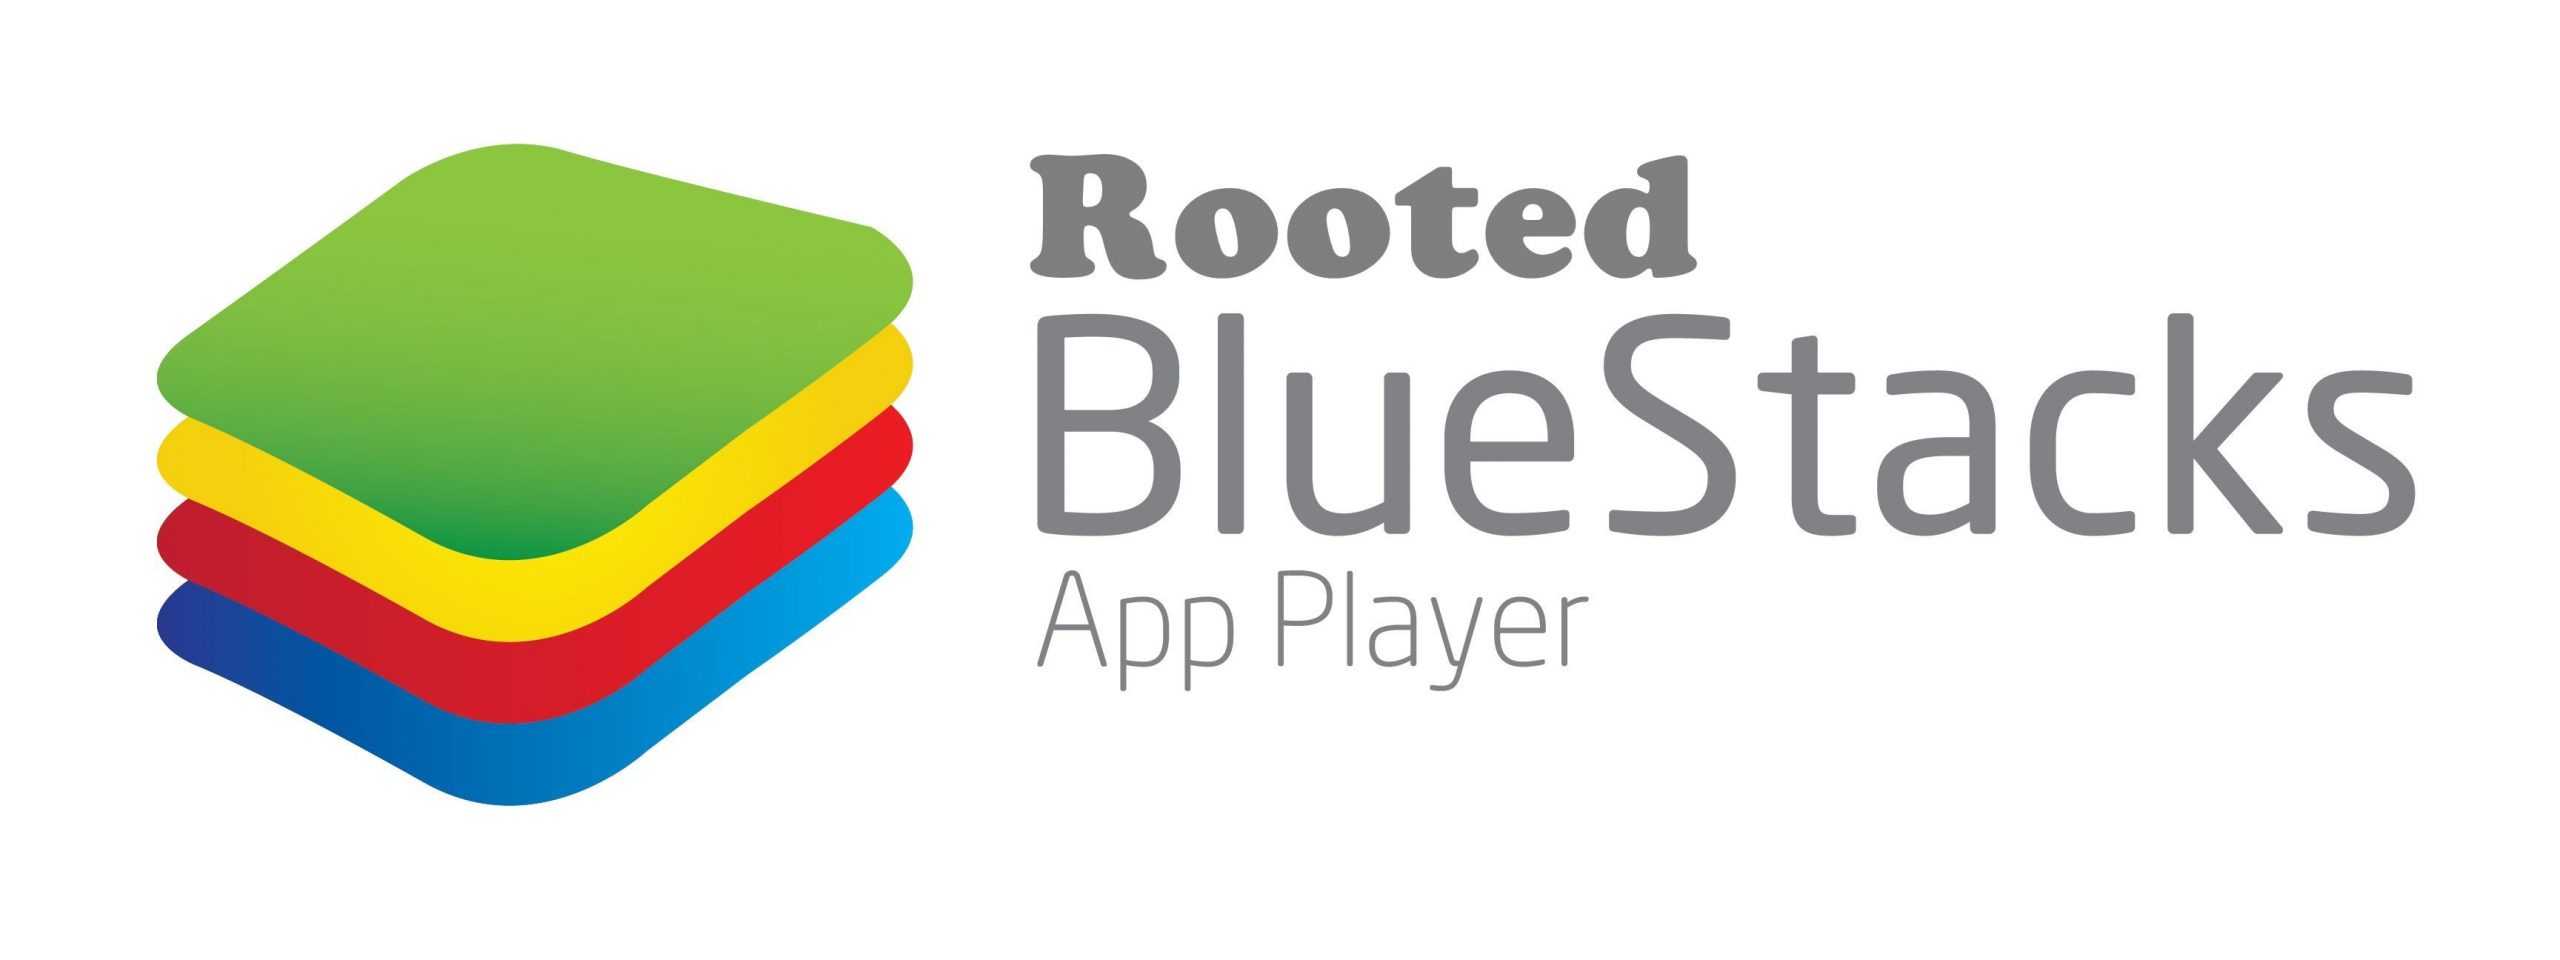 bluestacks app player scaled